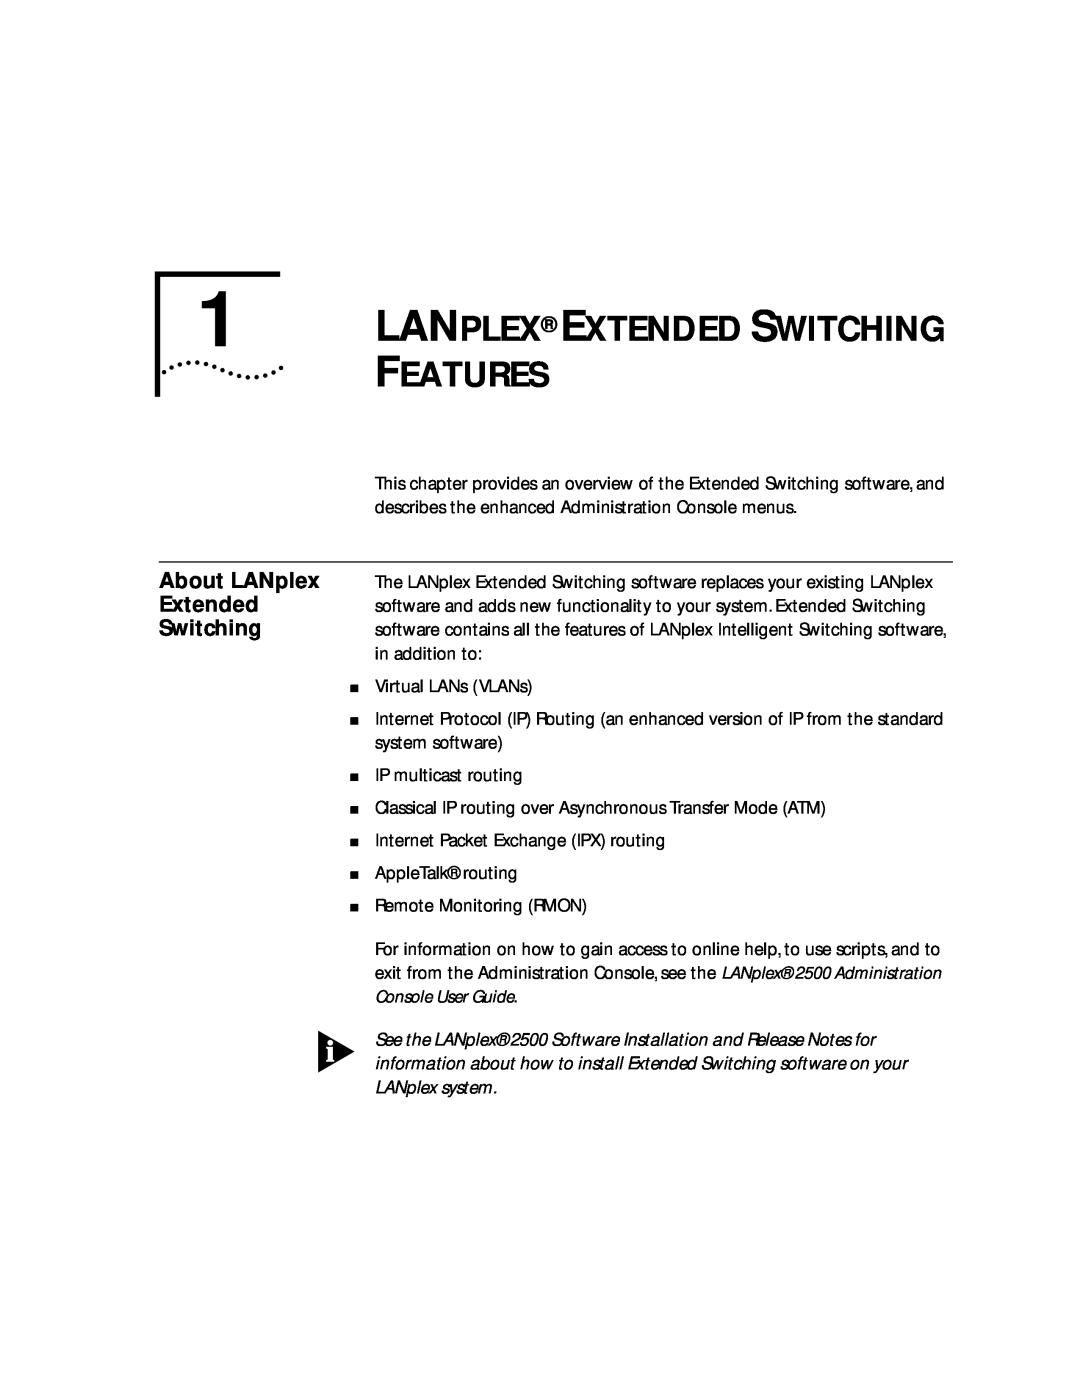 3Com 2500 manual Features, About LANplex, Lanplex Extended Switching 